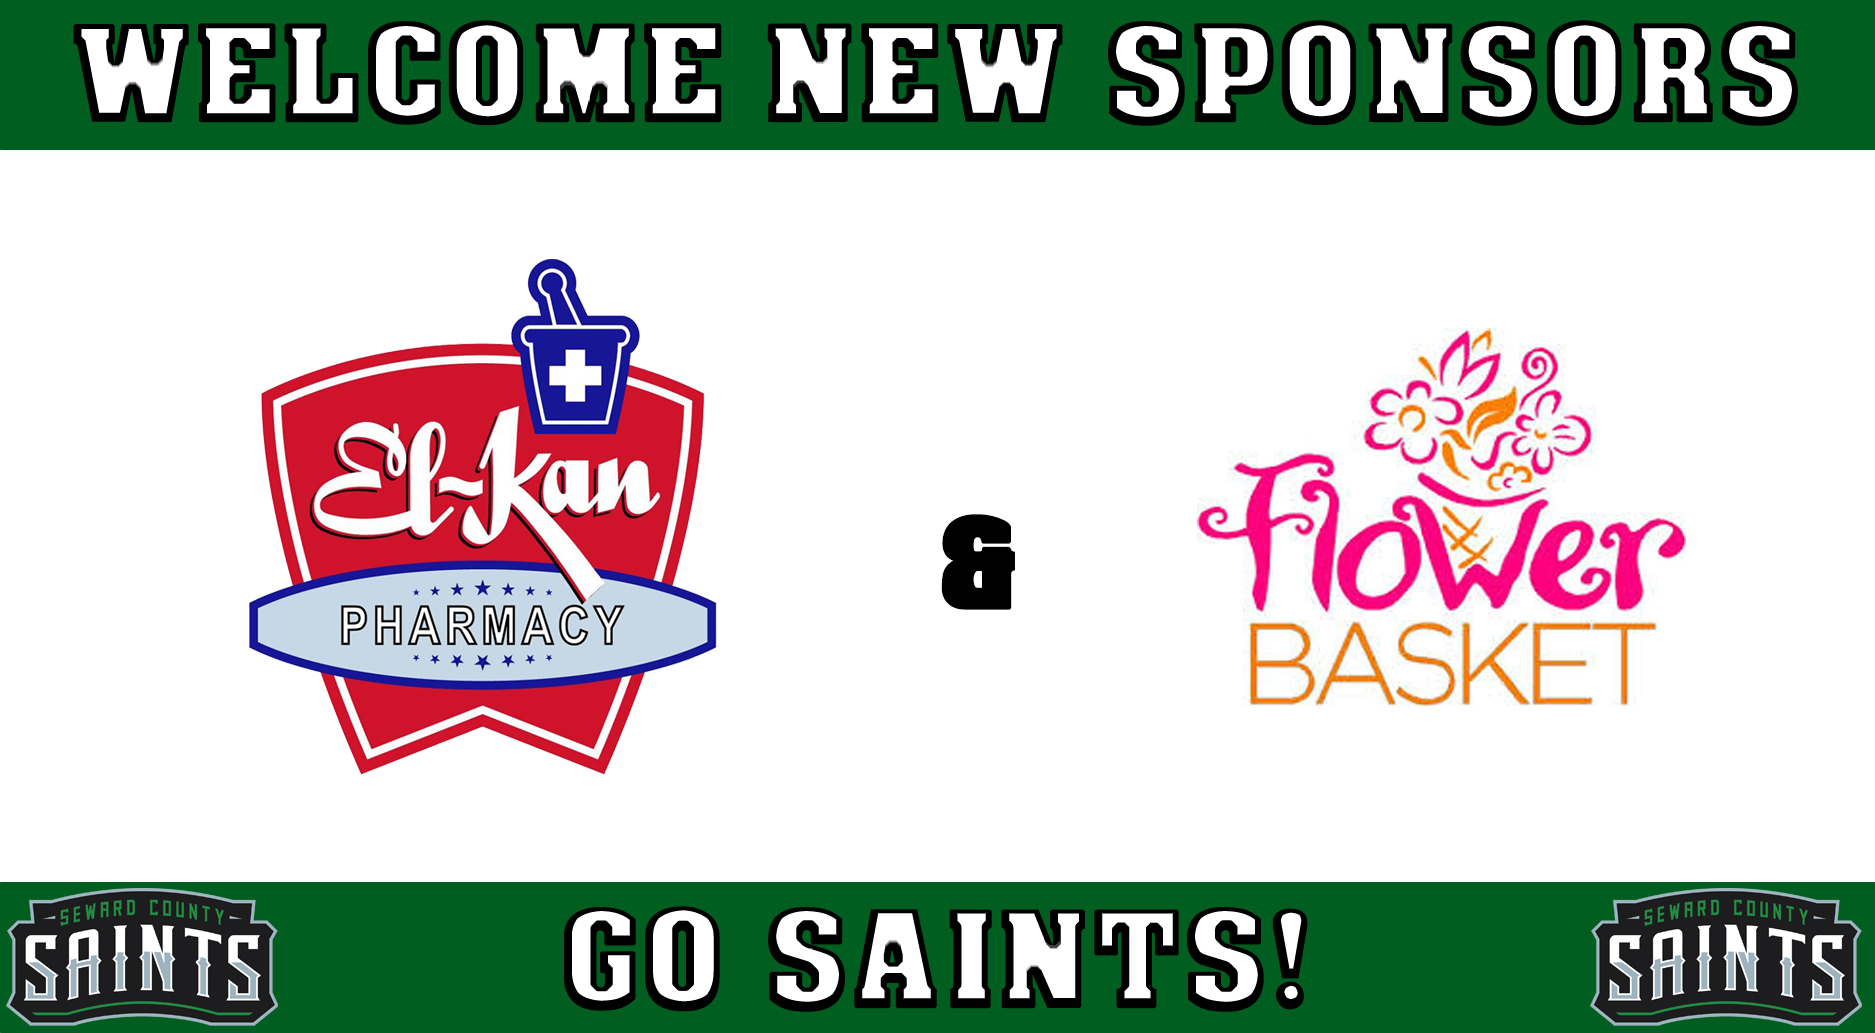 El-Kan Pharmacy and The Flower Basket join Saints Sponsors